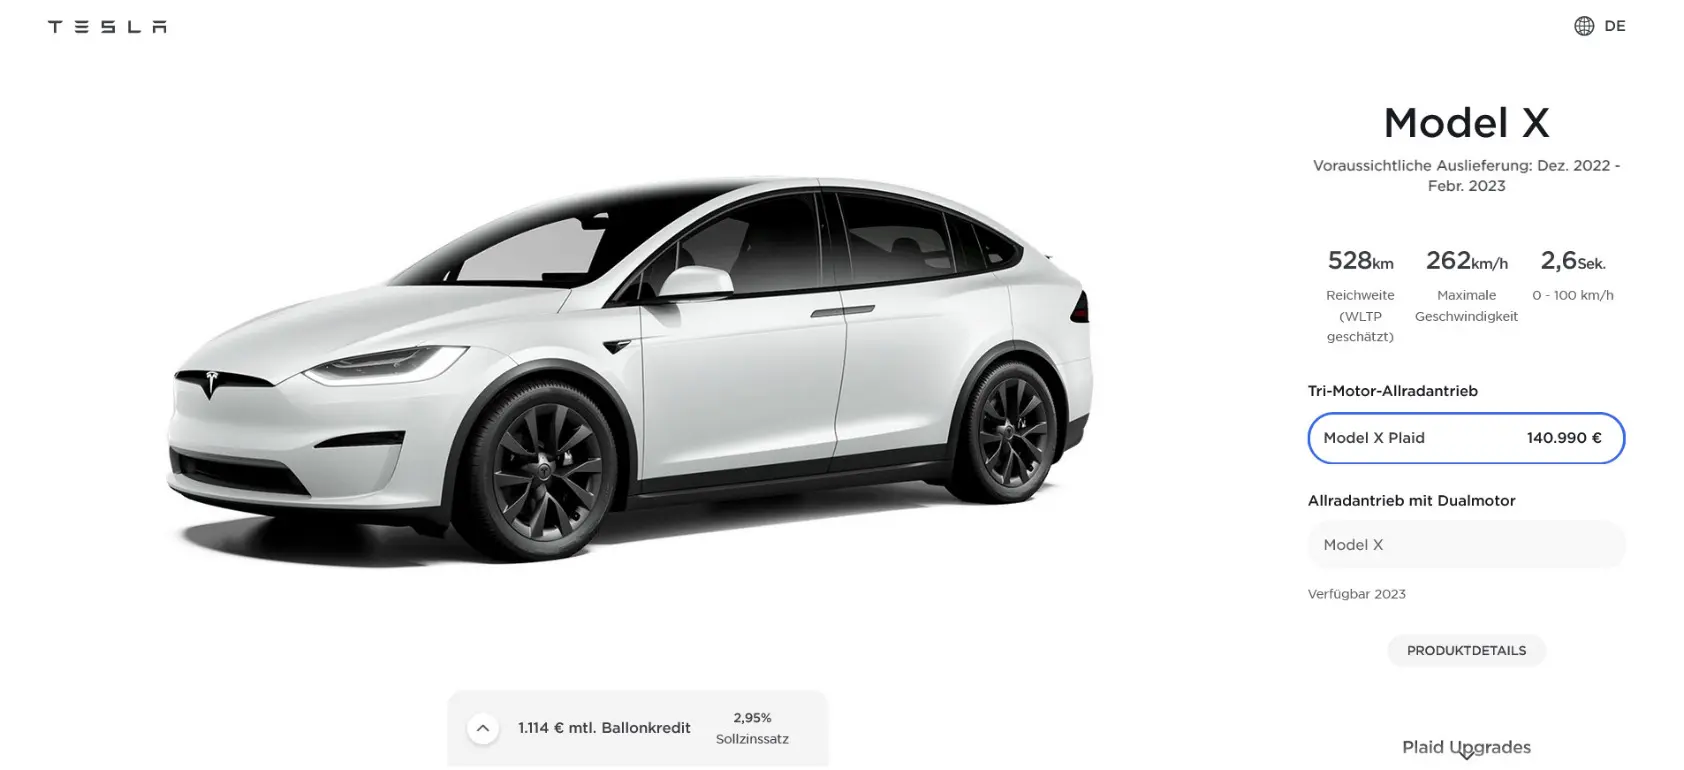 Tesla Model X Plaid - Best Luxury Electric Cars